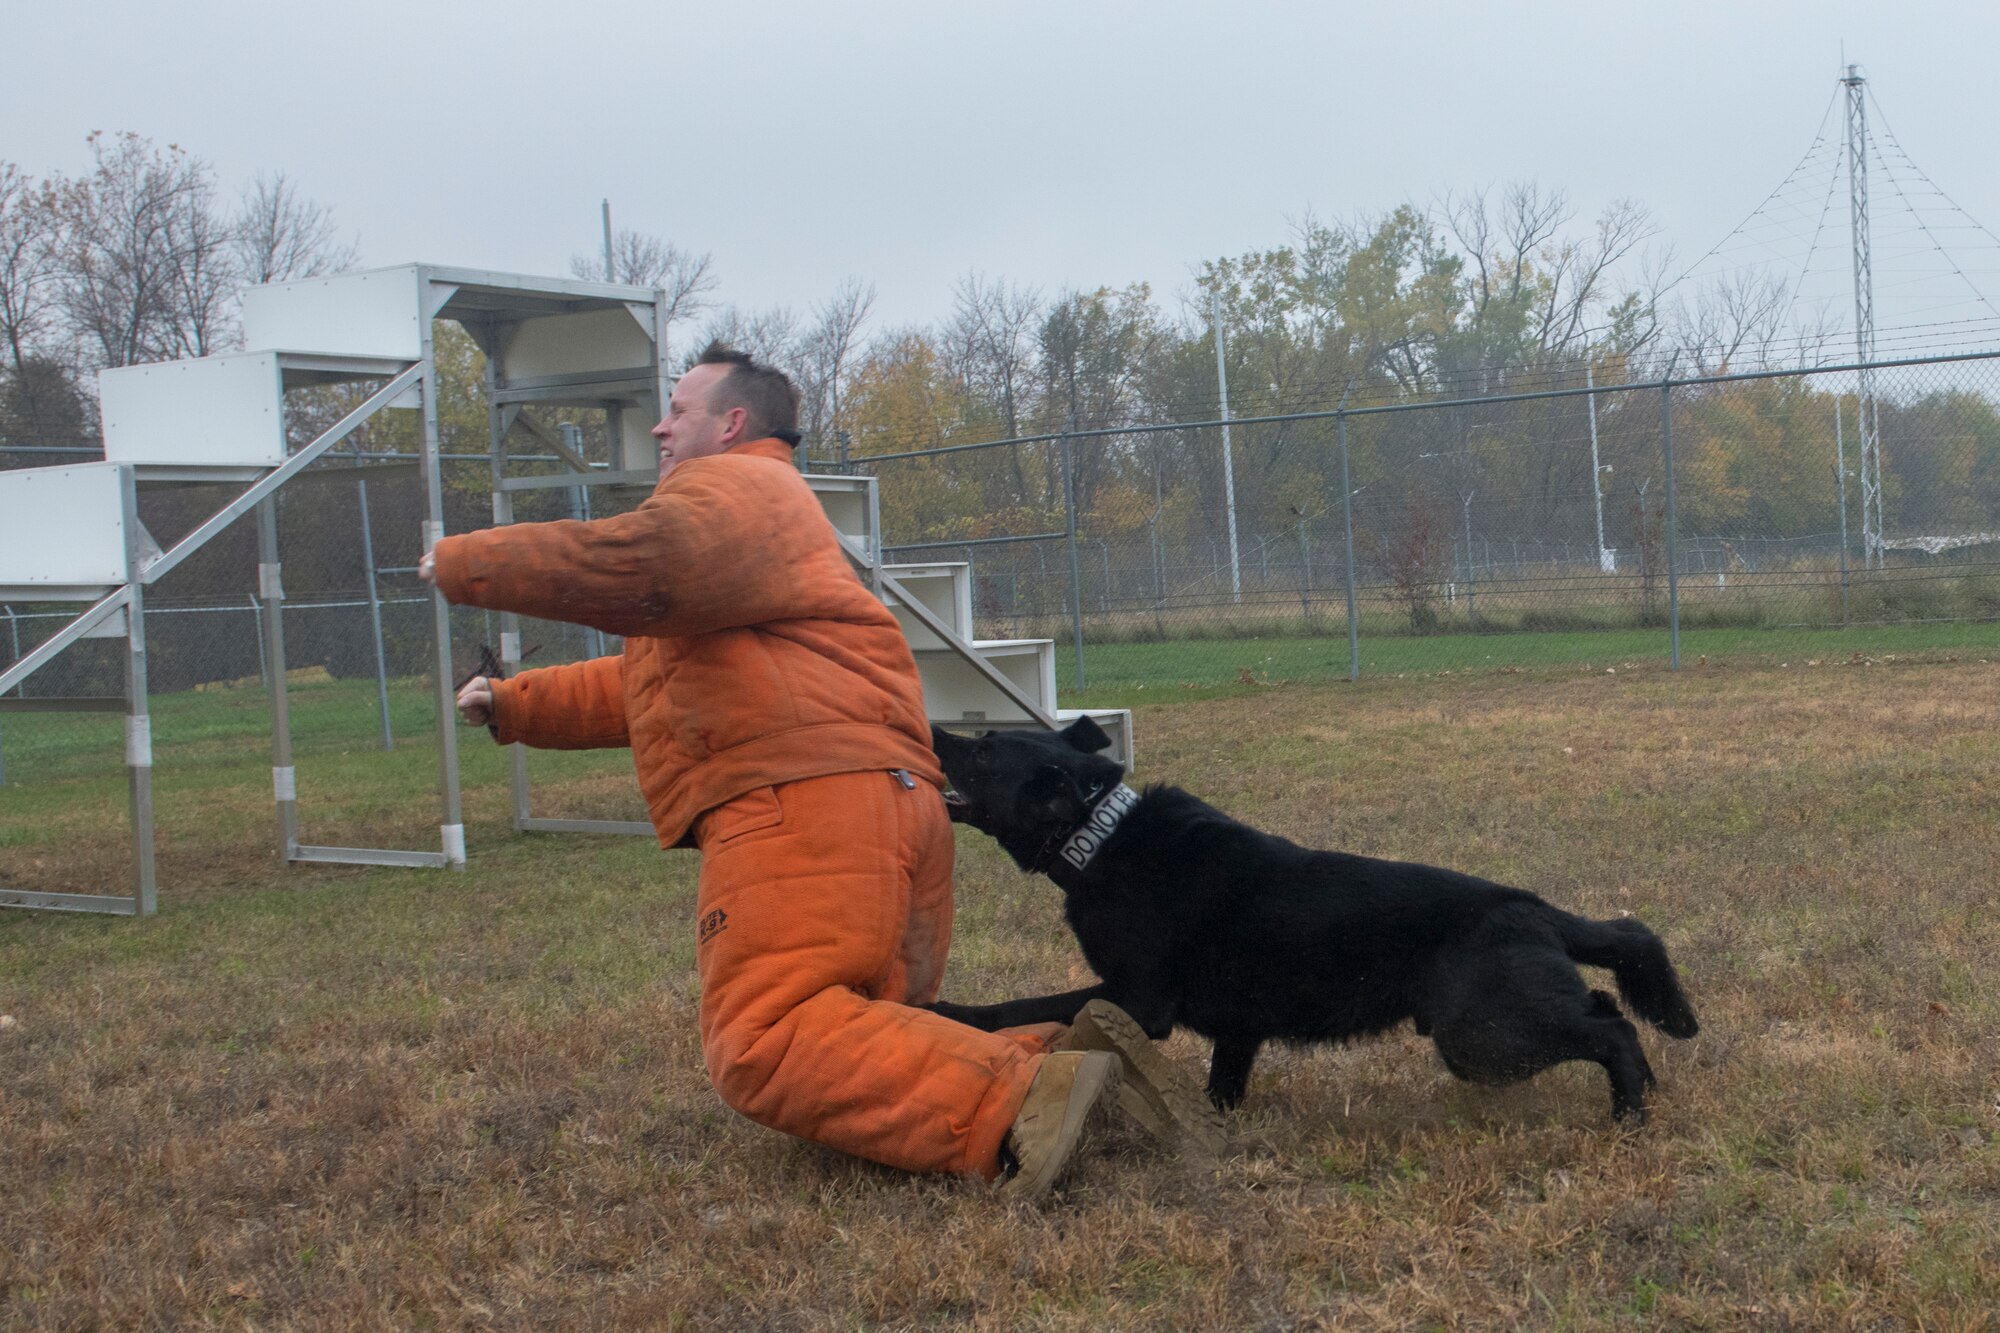 Airman in orange suit is bit by dog